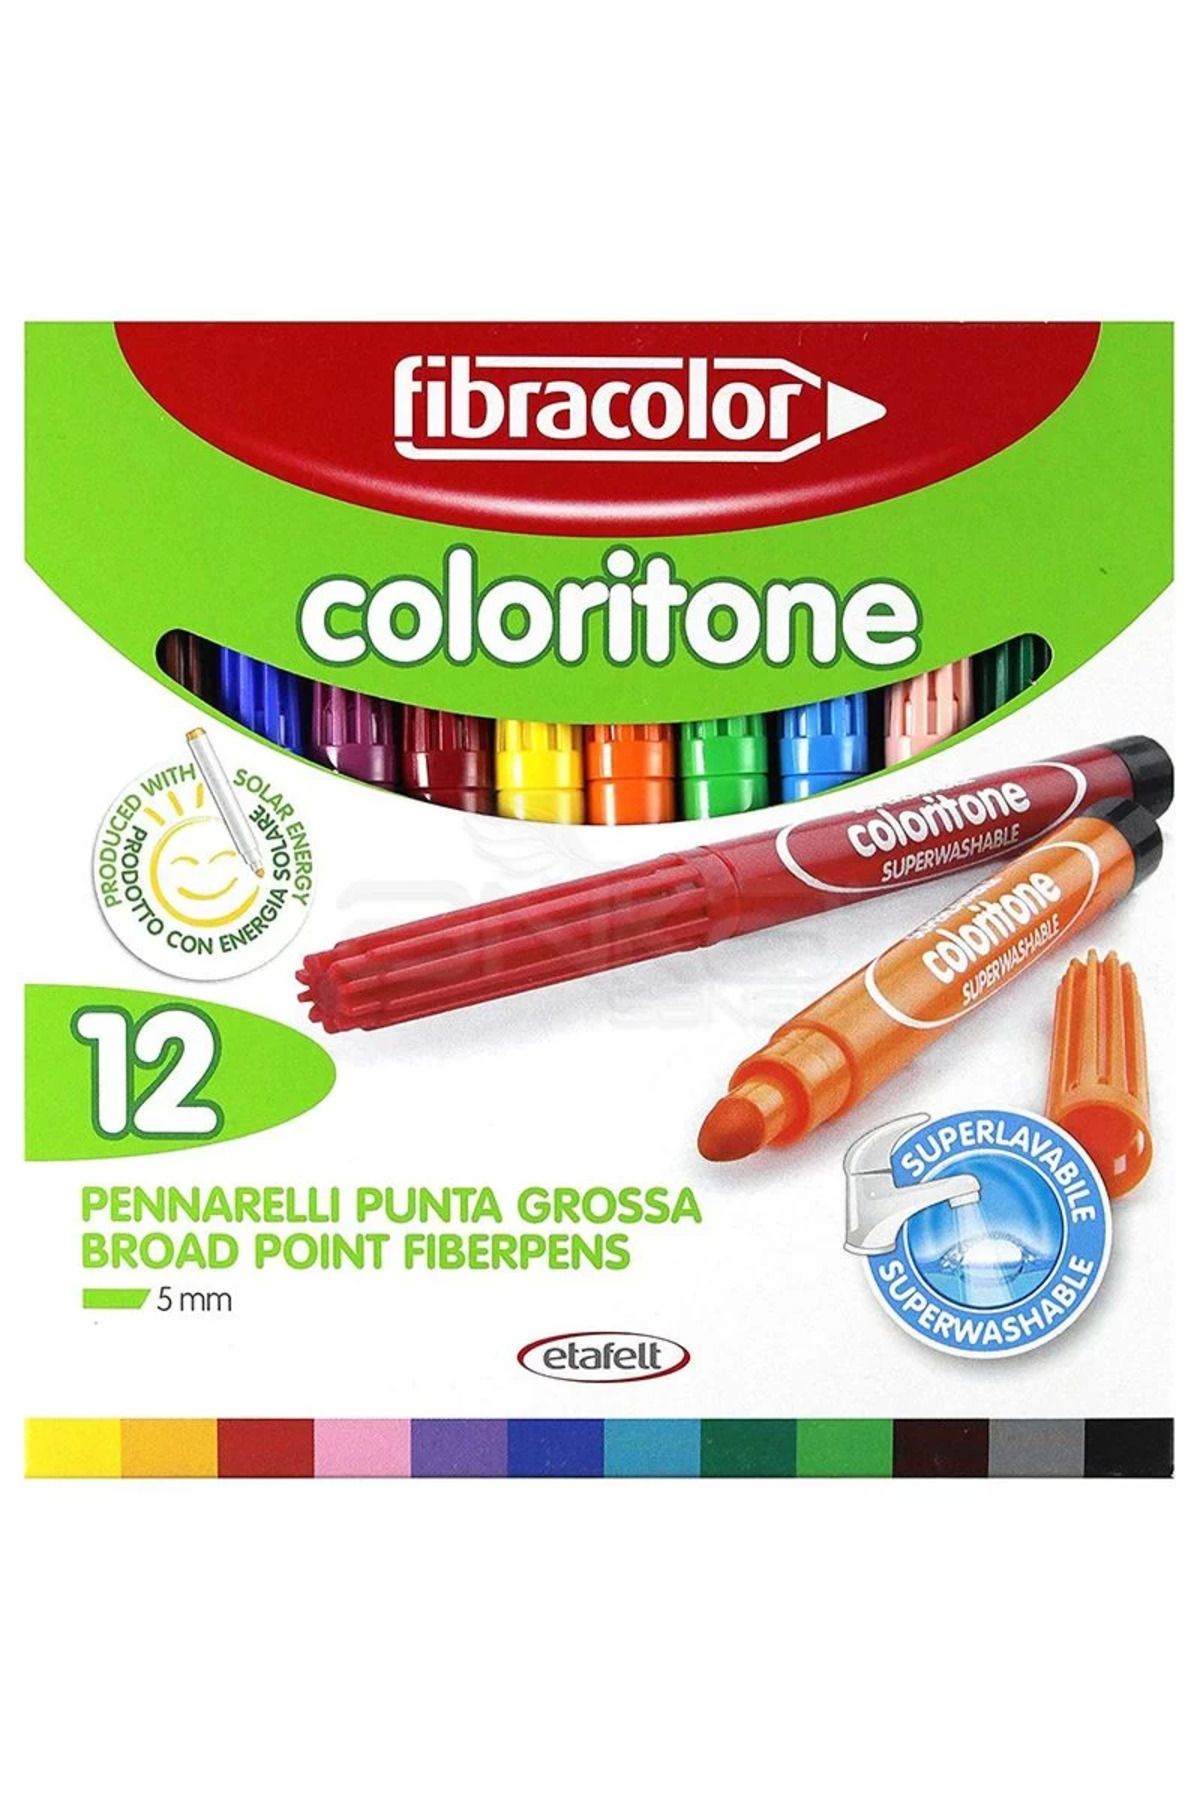 Fibracolor Coloritone Keçeli Kalem Seti 12 Renk